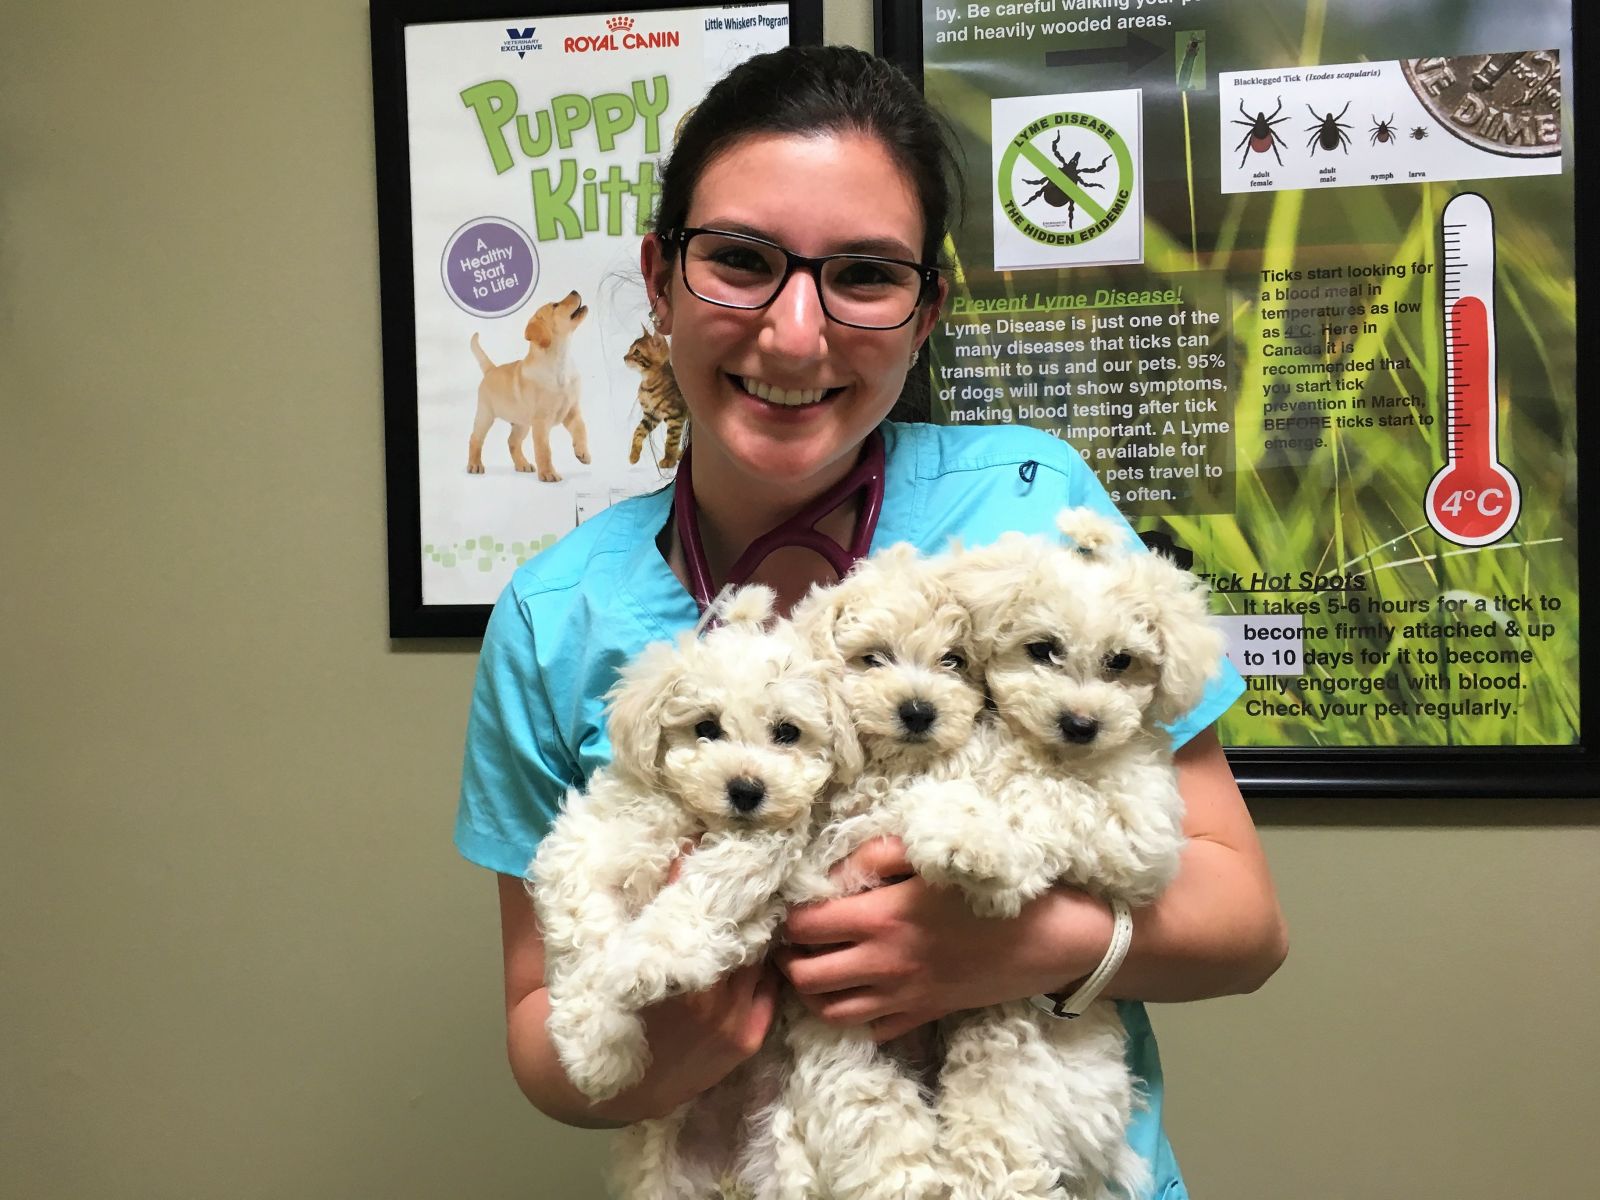 Student veterinarian holding puppies